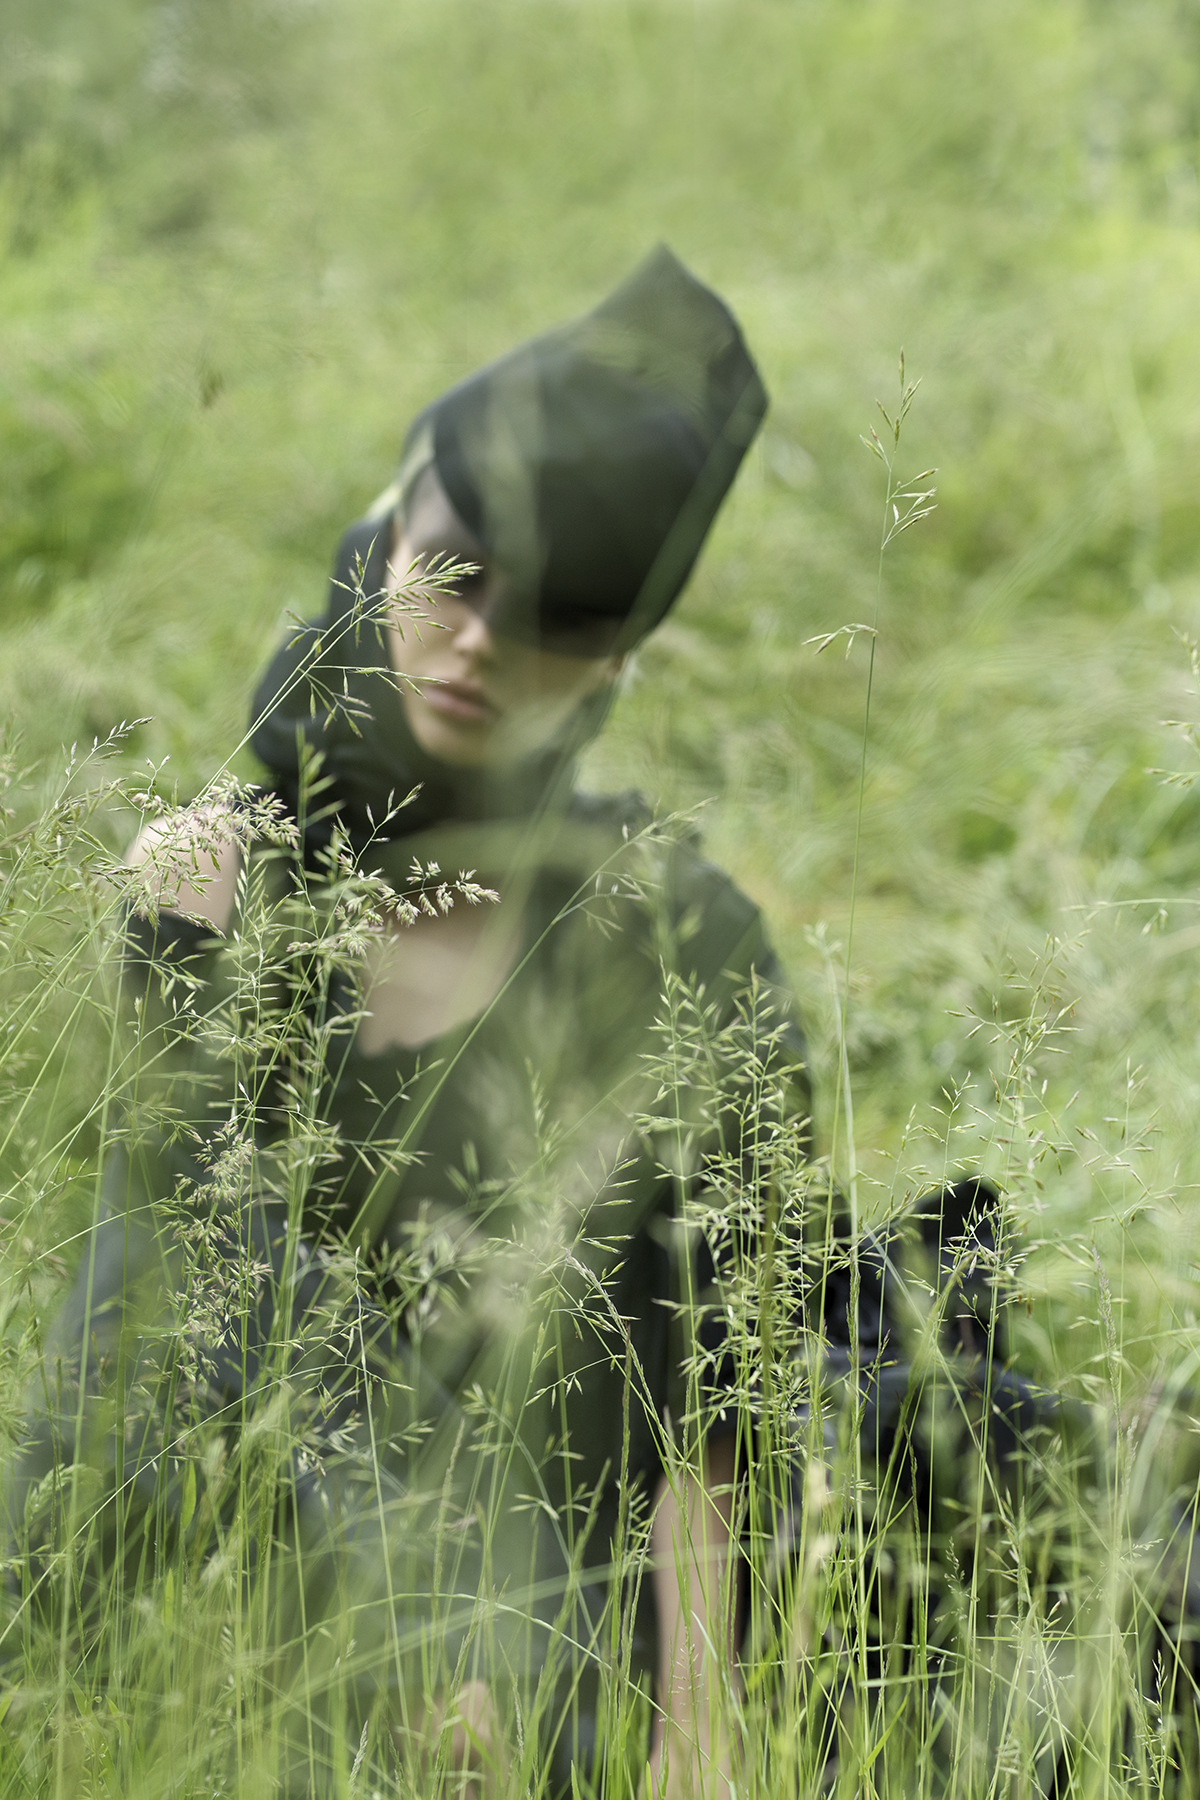 Model half hidden in long grass wearing black clothing